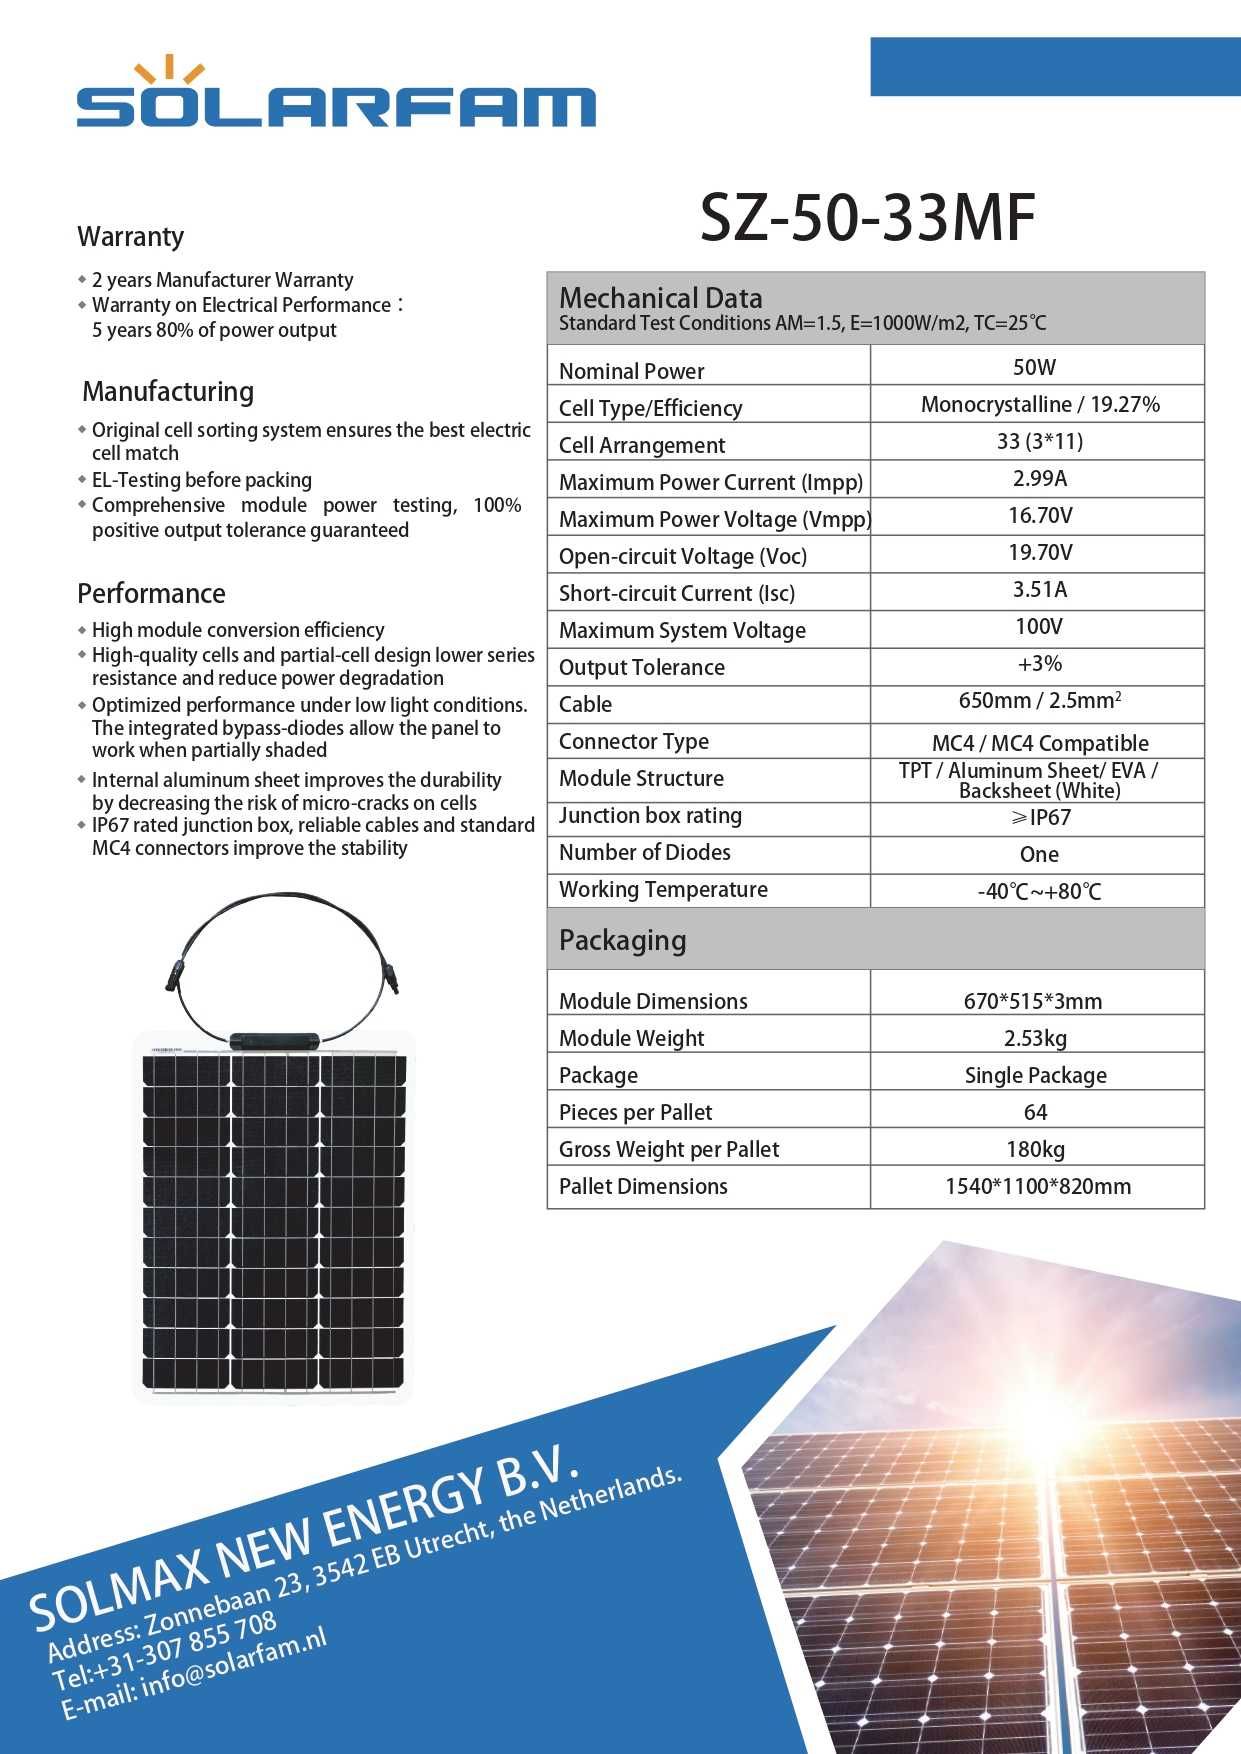 SOLMAX гъвкав соларен панел 50W 12V